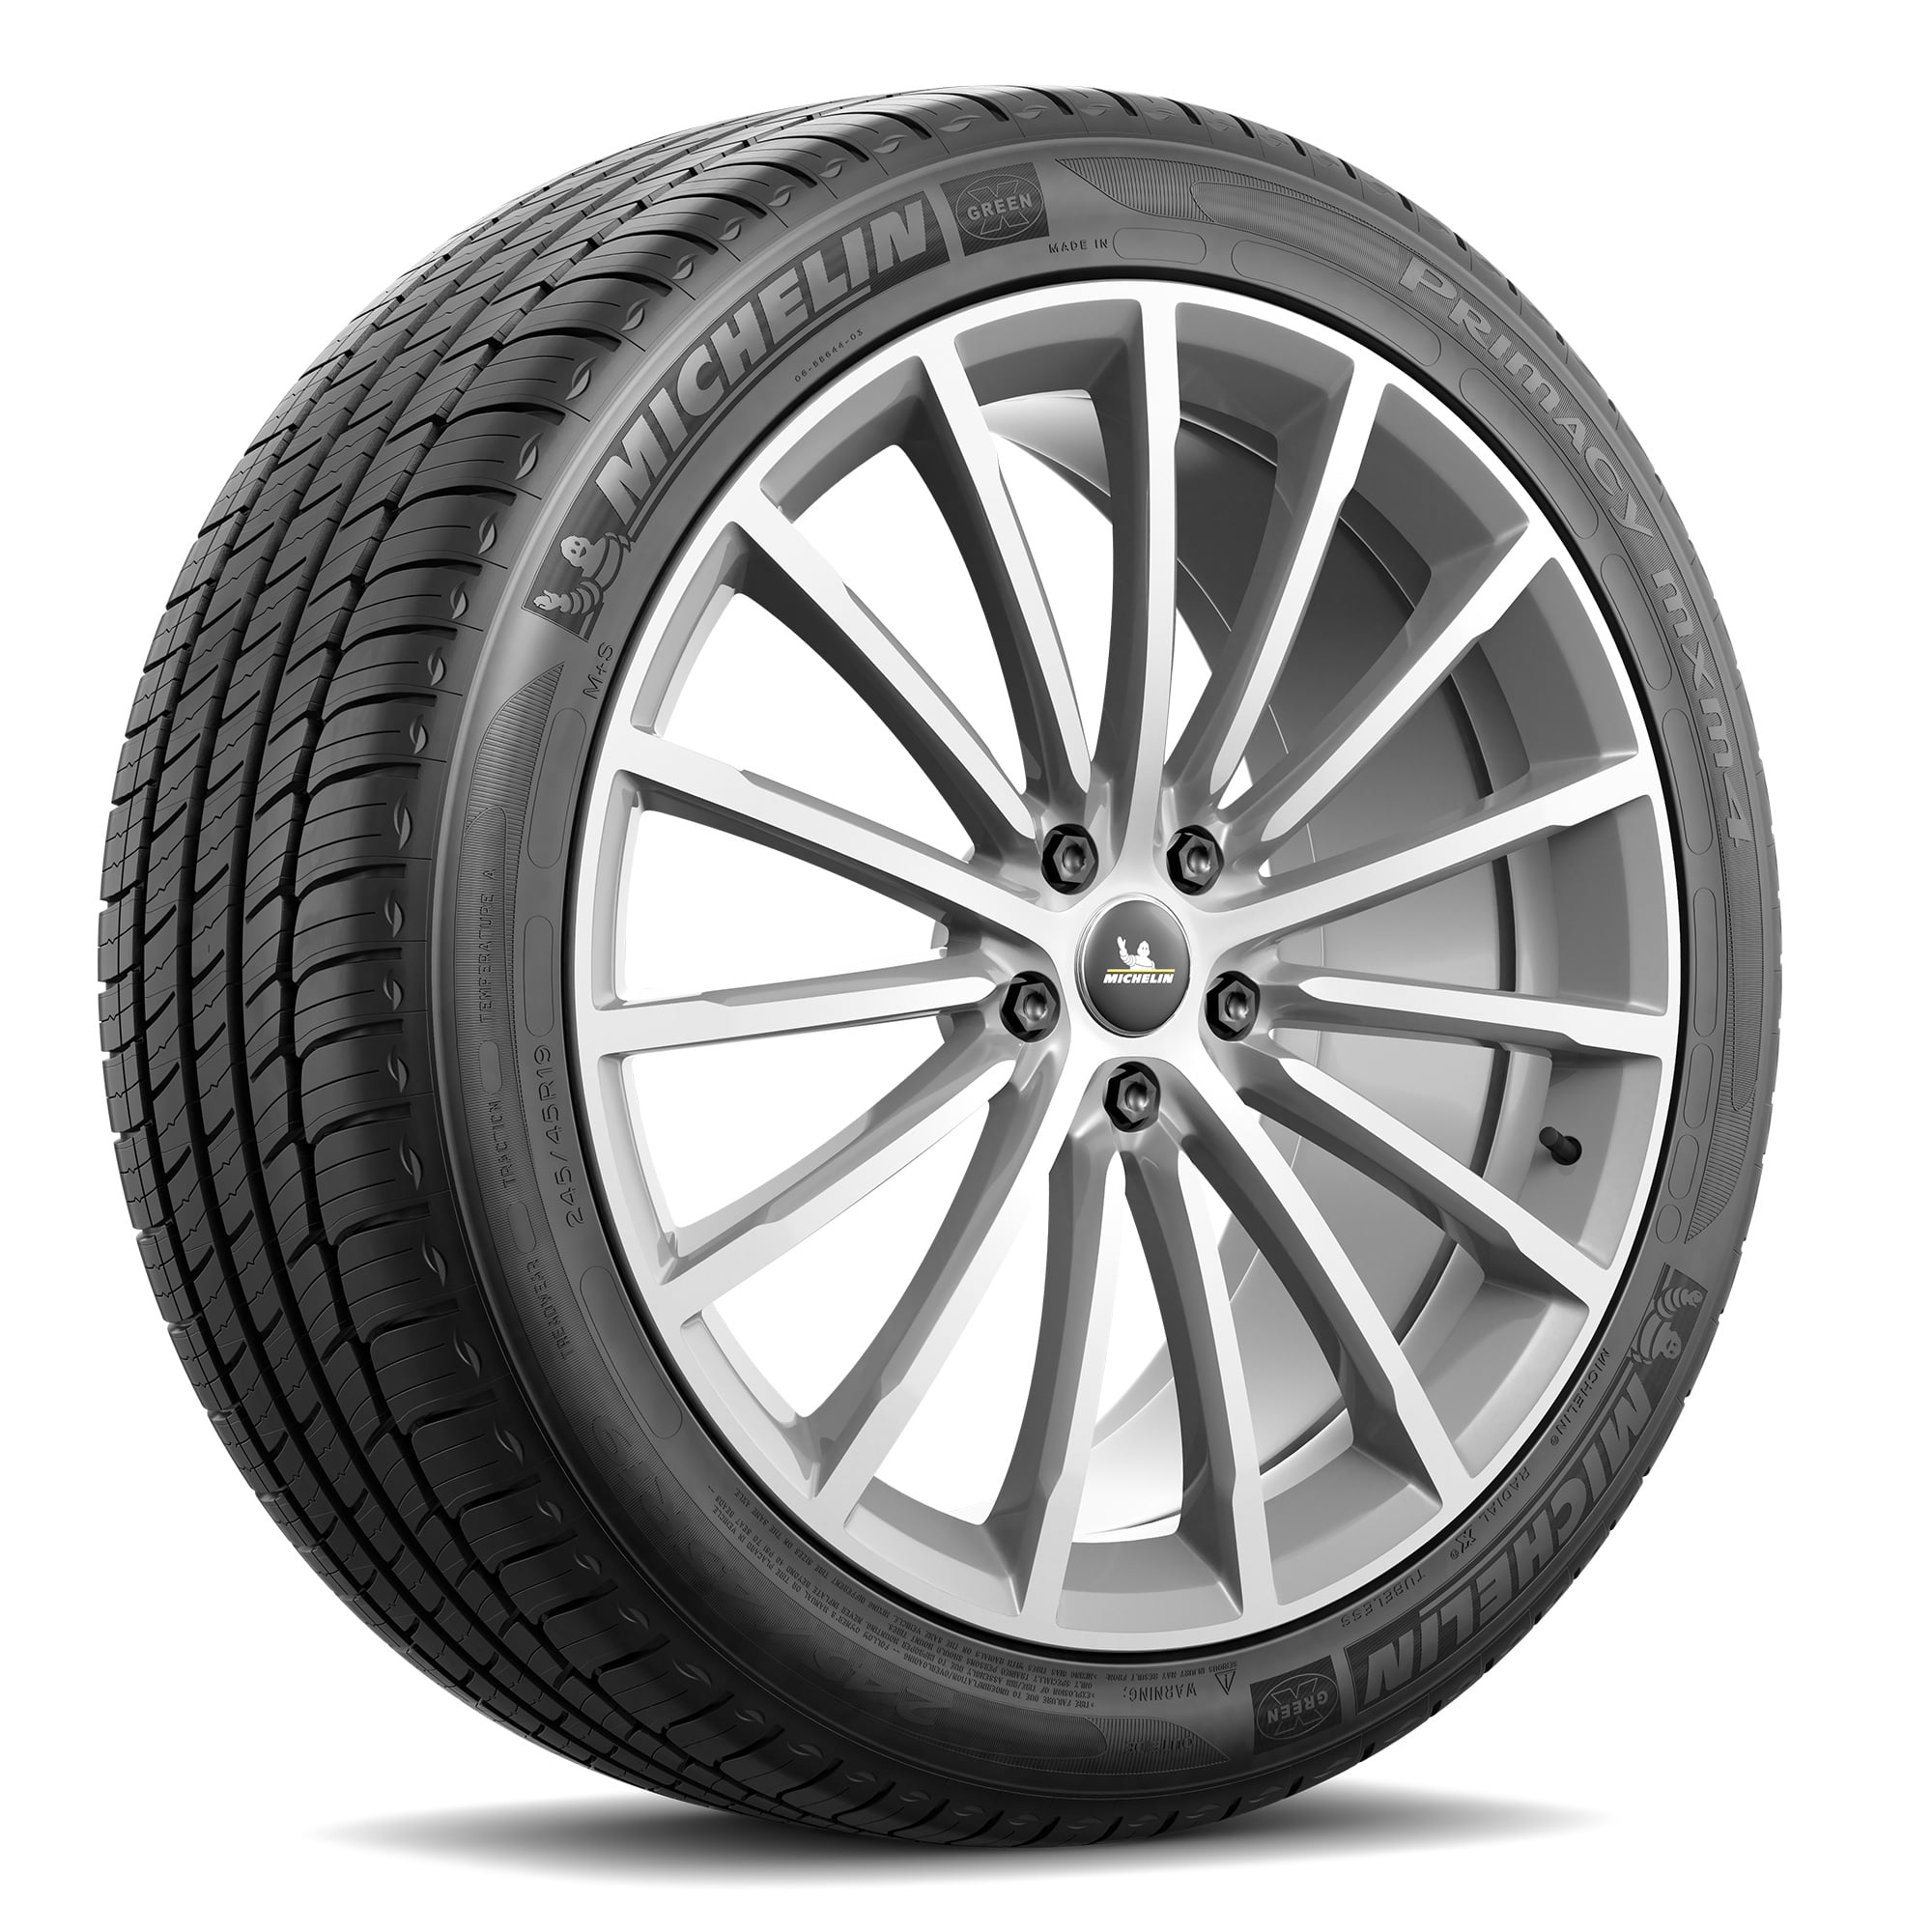 Michelin Primacy All Season 225/65R17 Tires, 40489